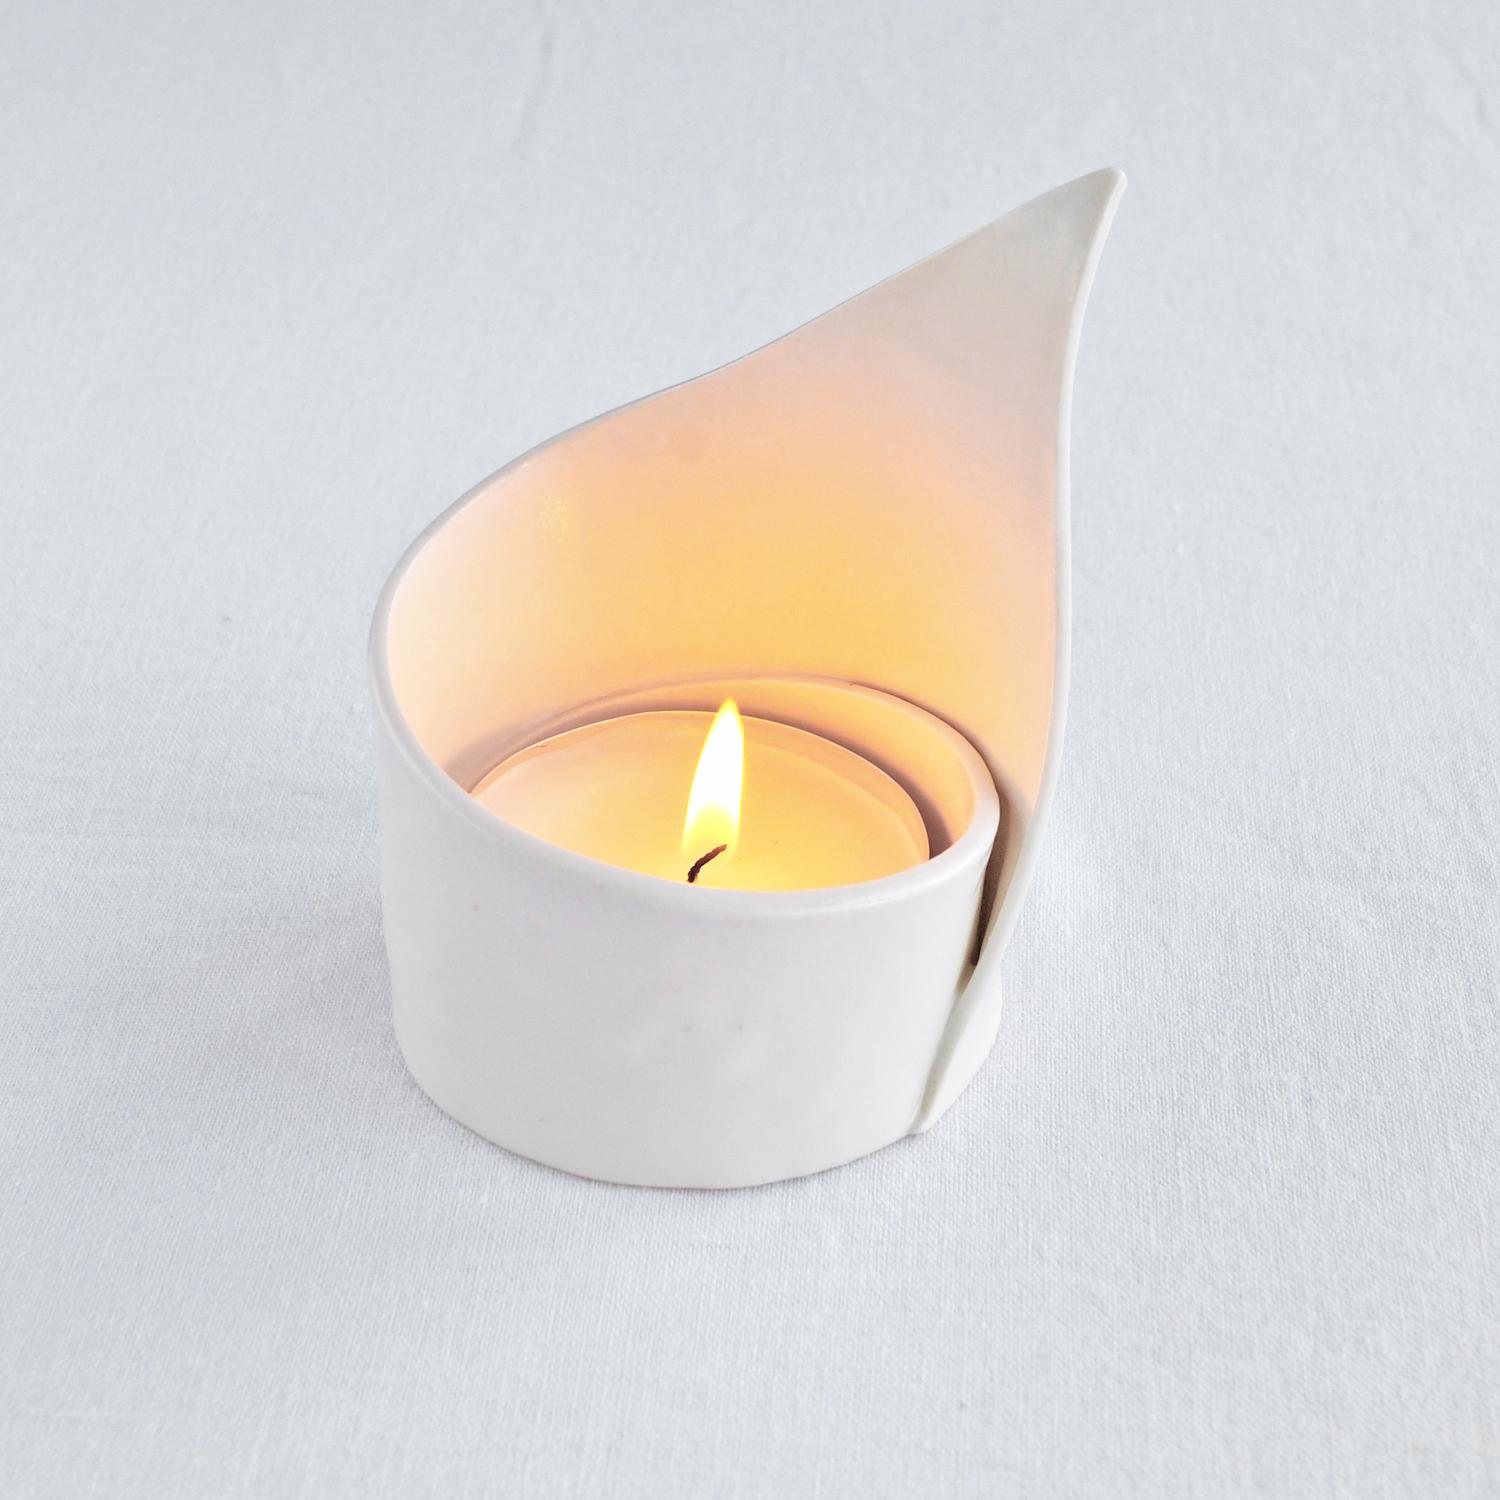 spiral LILY, ceramic candle holder, porcelain tea light holder, satin white, white glaze Vanillakiln, very zen moments,